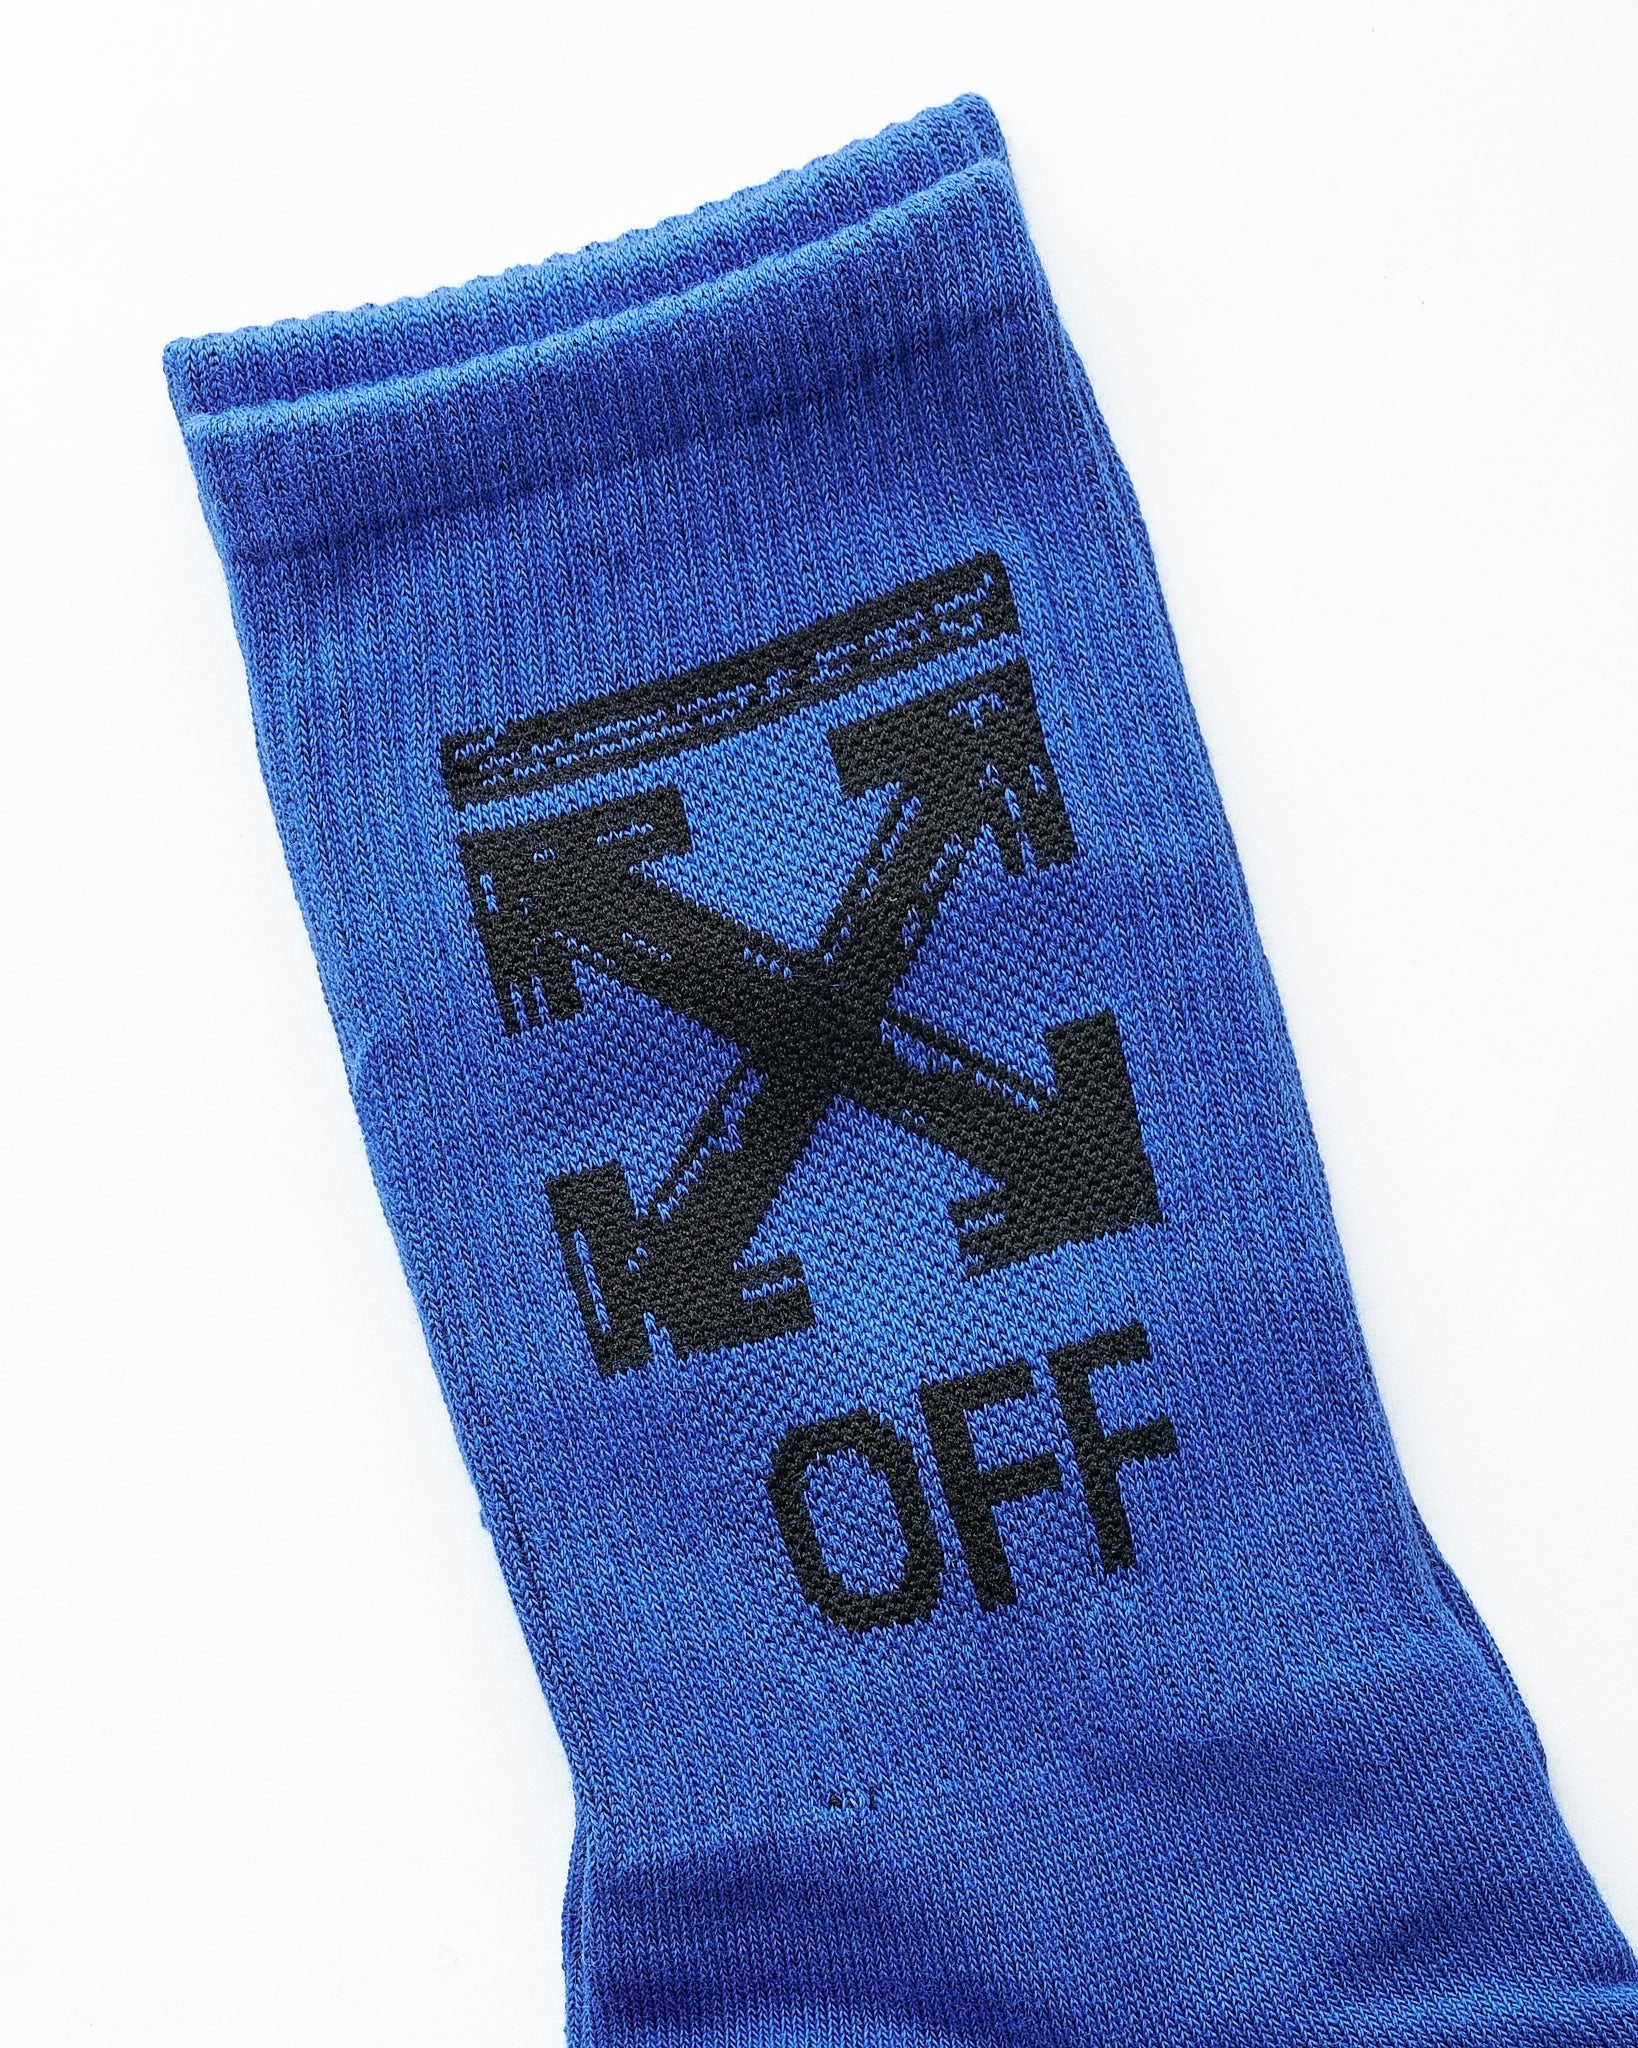 MOI OUTFIT-Cross Arrow 5 Pairs Quarter Socks 14.90